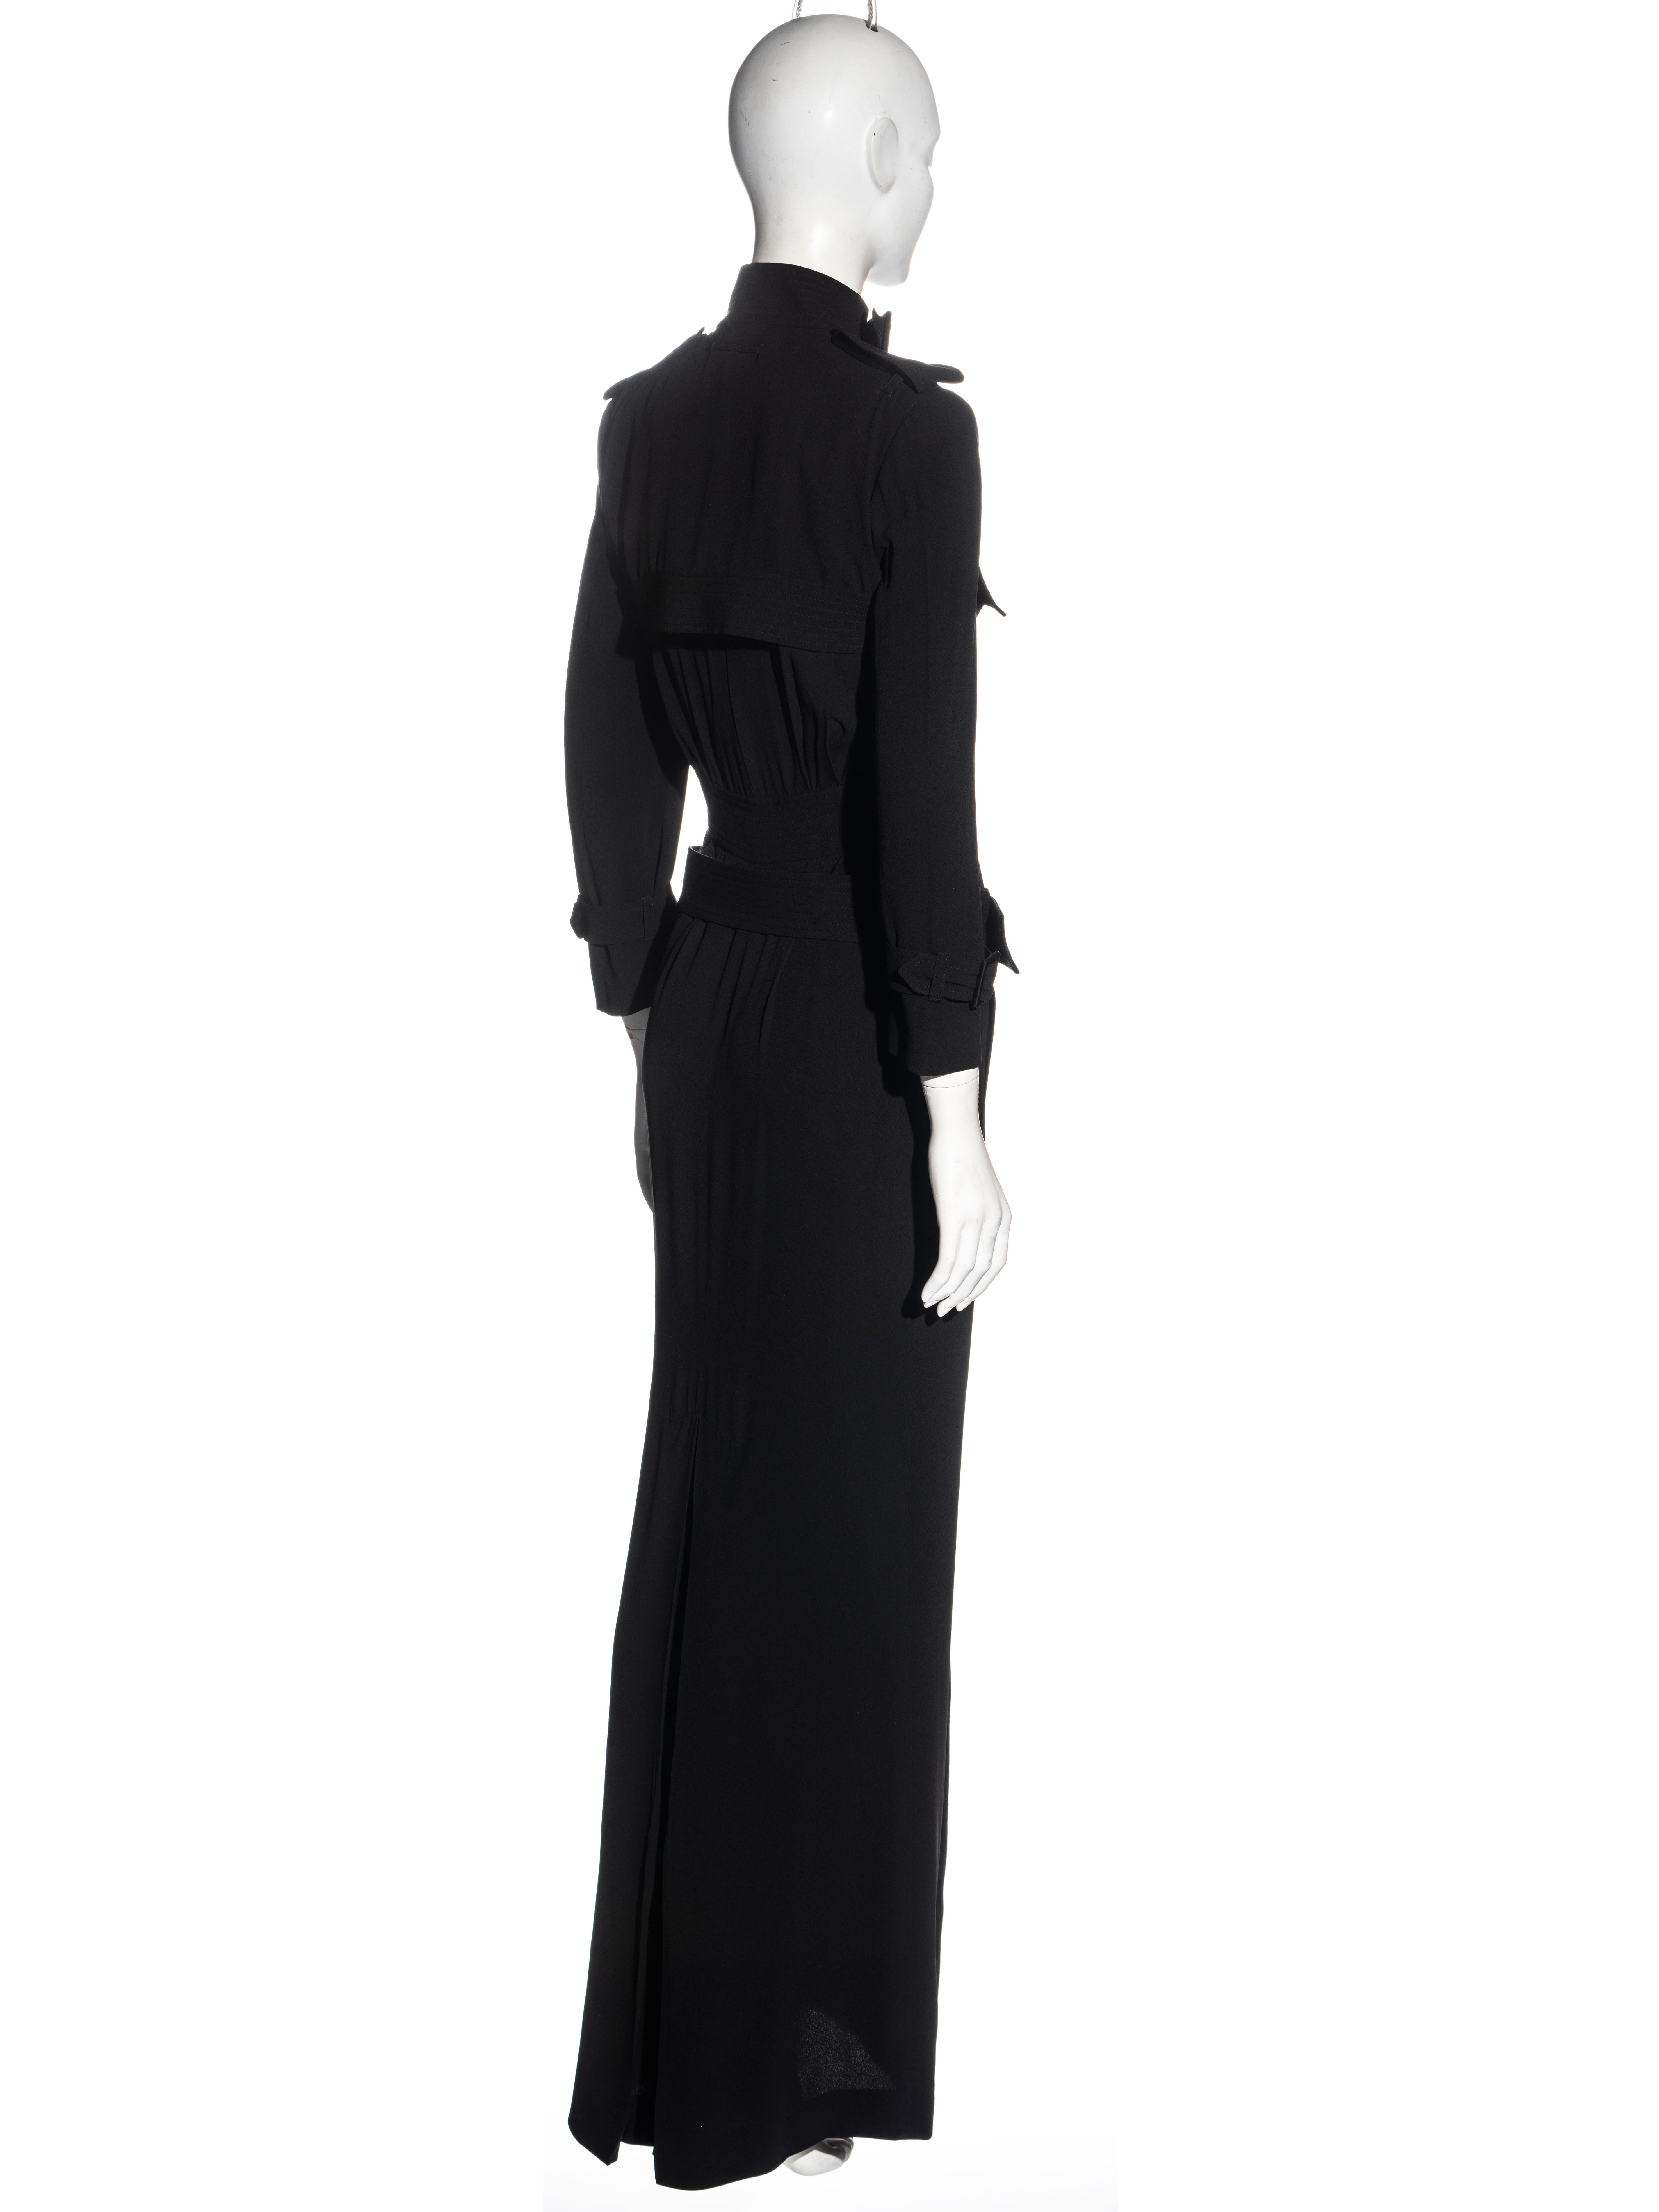 Jean Paul Gaultier black rayon shirt dress with bondage belts, fw 2009 For Sale 2